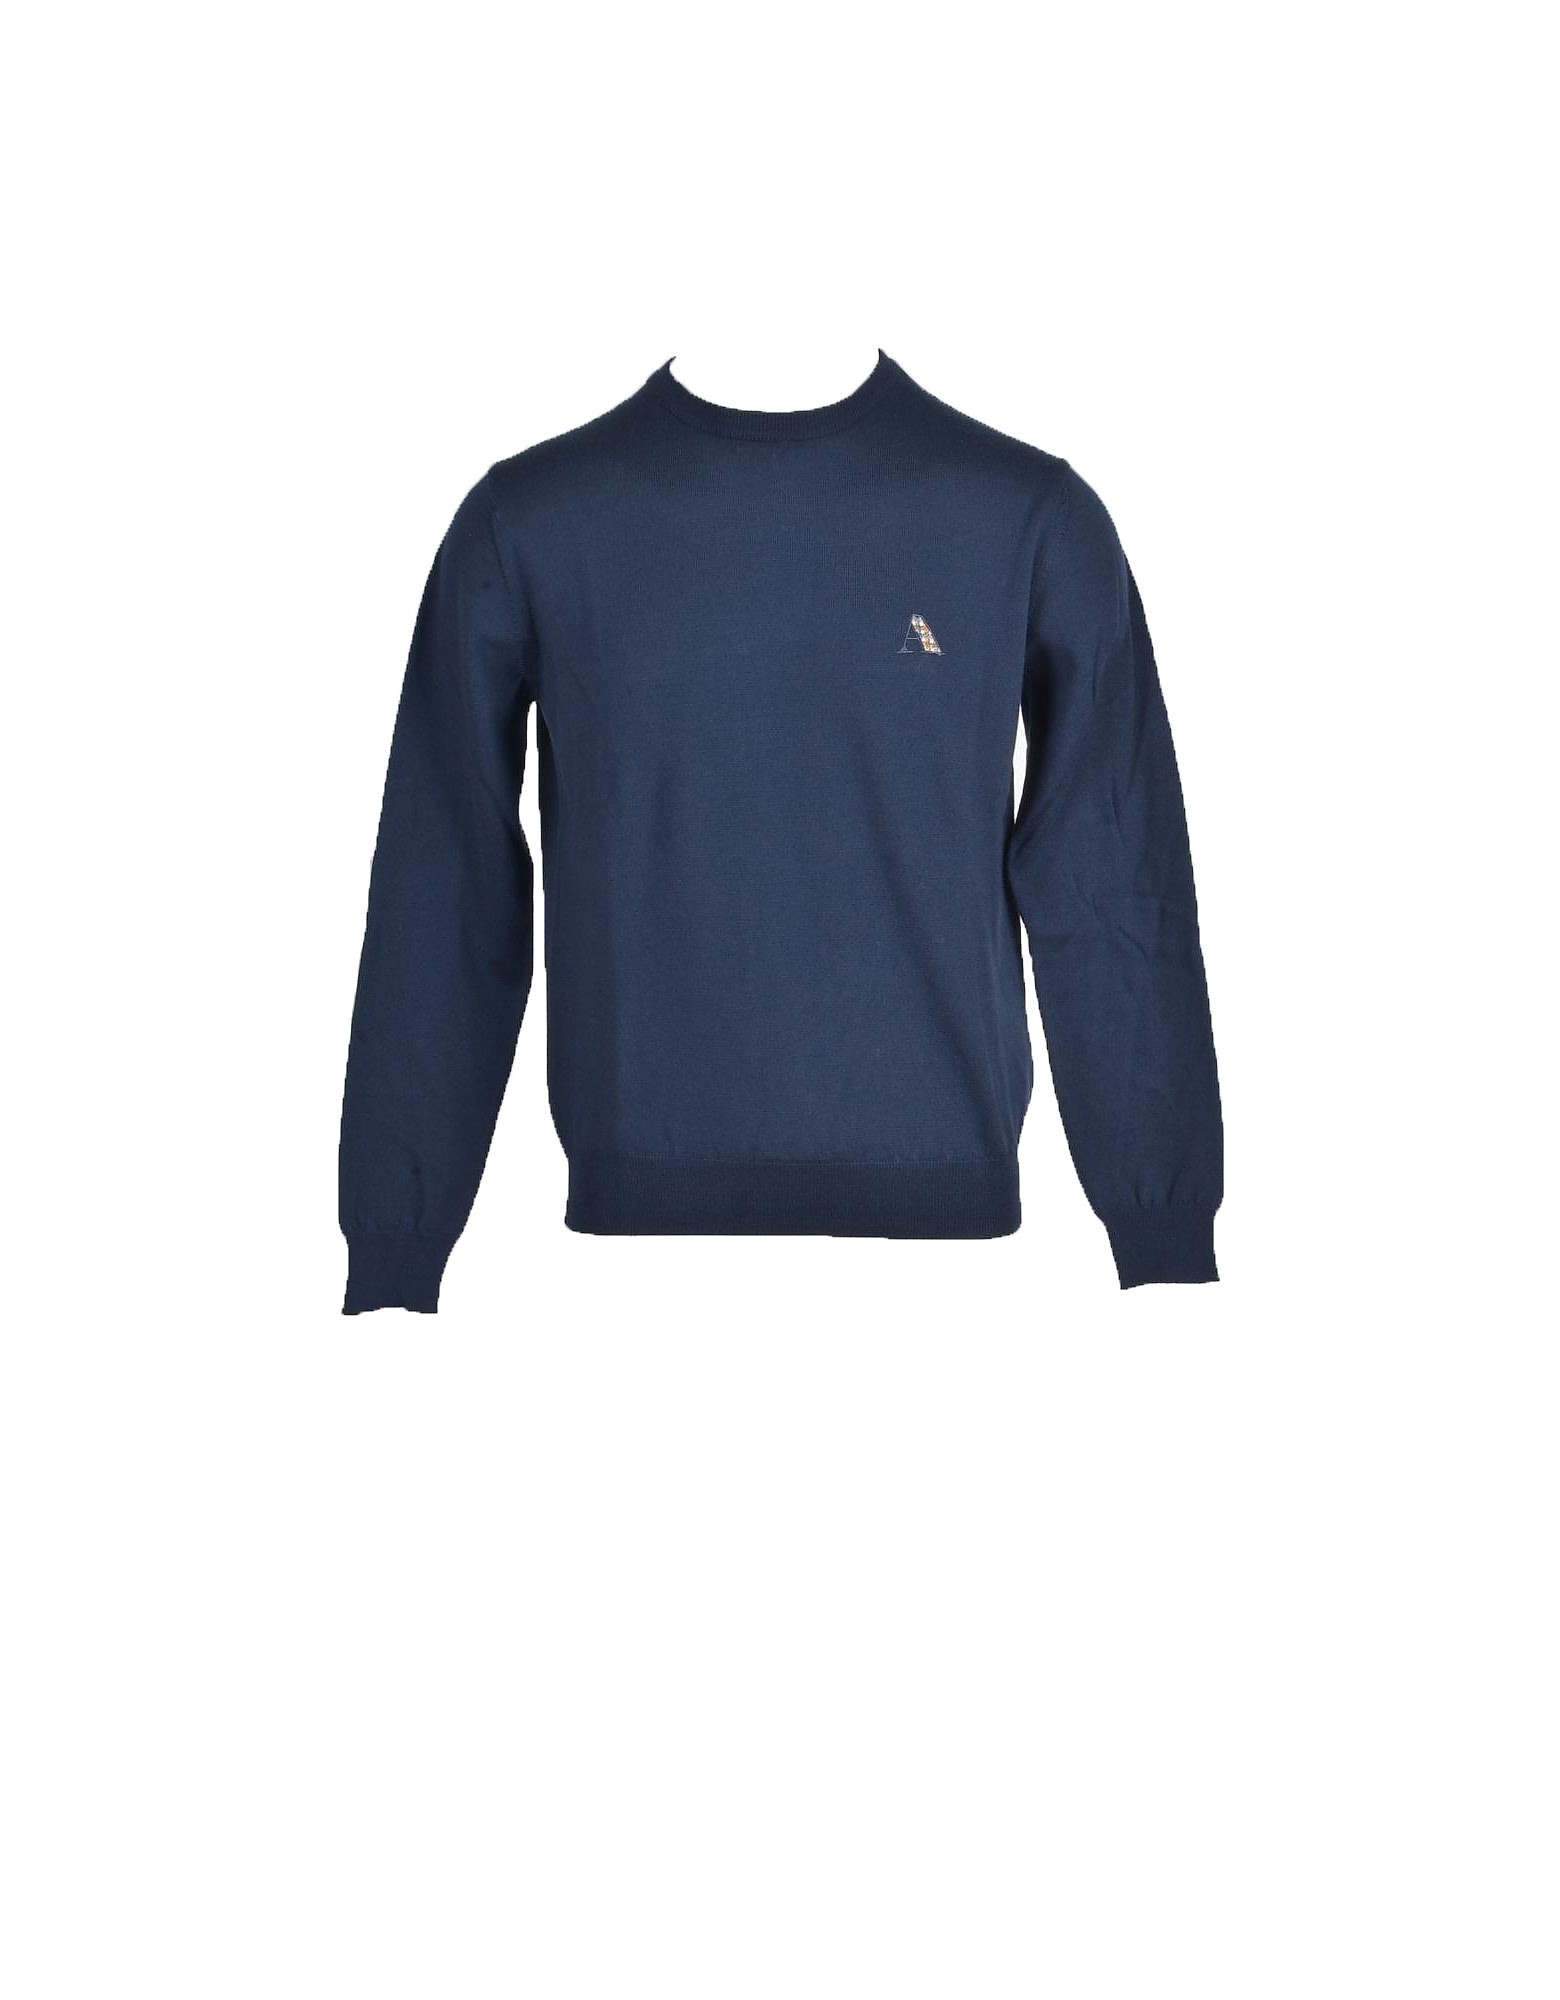 Aquascutum Mens Navy Blue Sweater